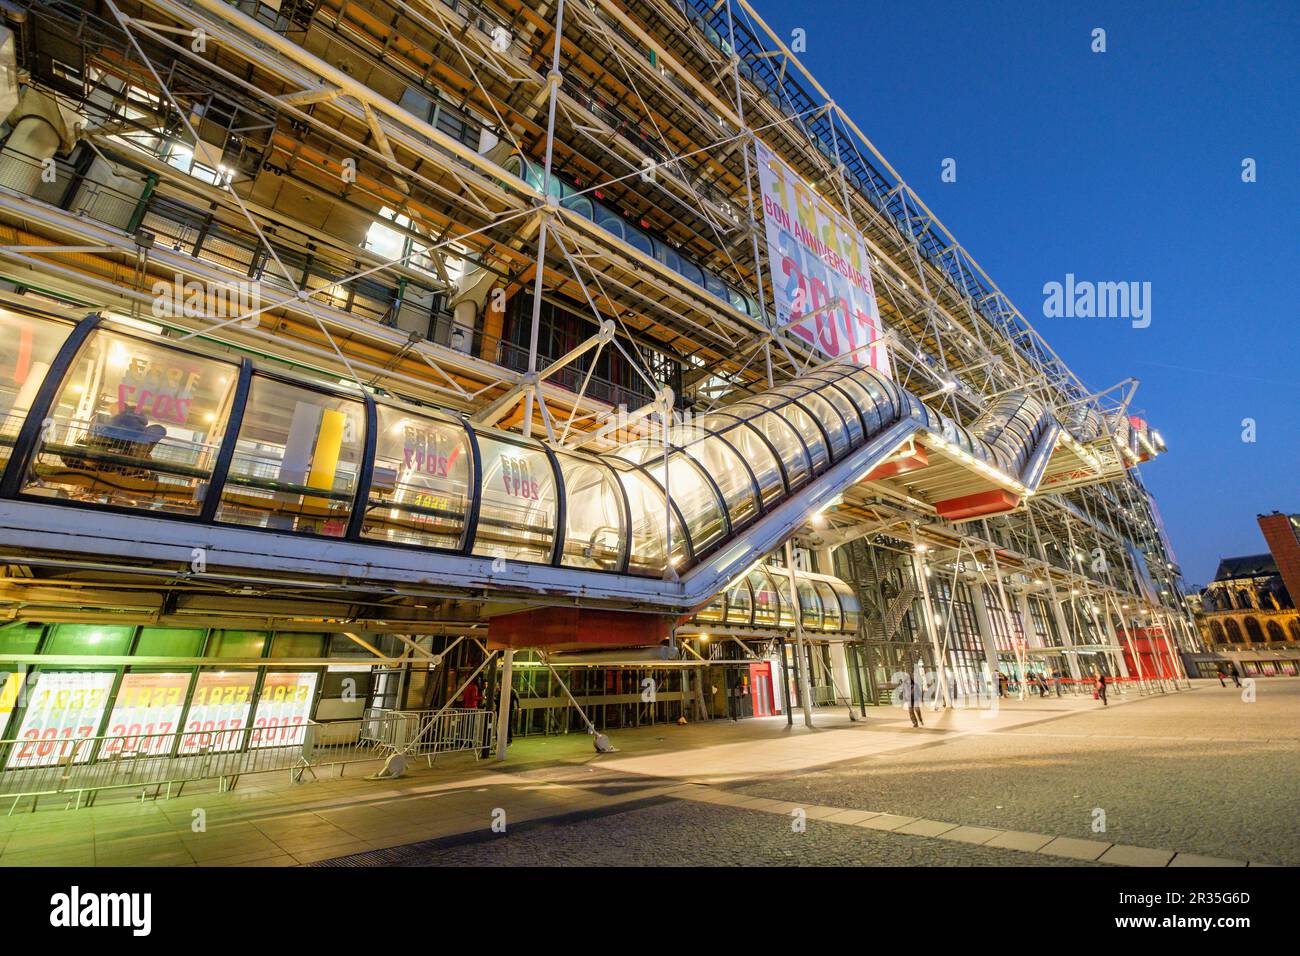 Centro Nacional de Arte y Cultura Georges Pompidou, Paris, France,Western Europe. Stock Photo